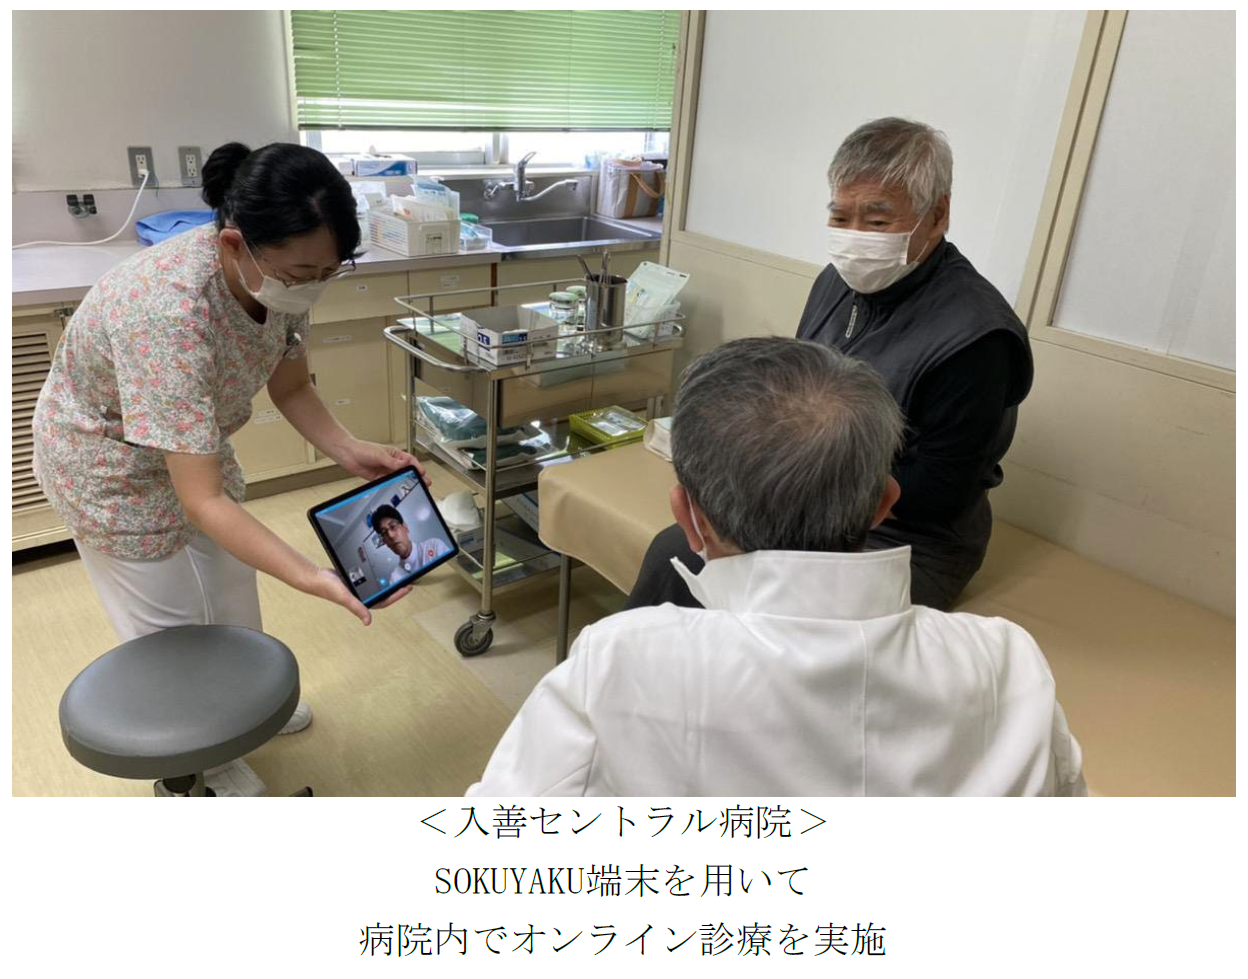 「SOKUYAKU」、富山県 入善セントラル病院と連携。遠隔診療体制の構築を支援し、千葉県の病院との医師のシェアリングを実現〜院内オンライン診療システムを開発し、地域医療体制の強化を支援〜